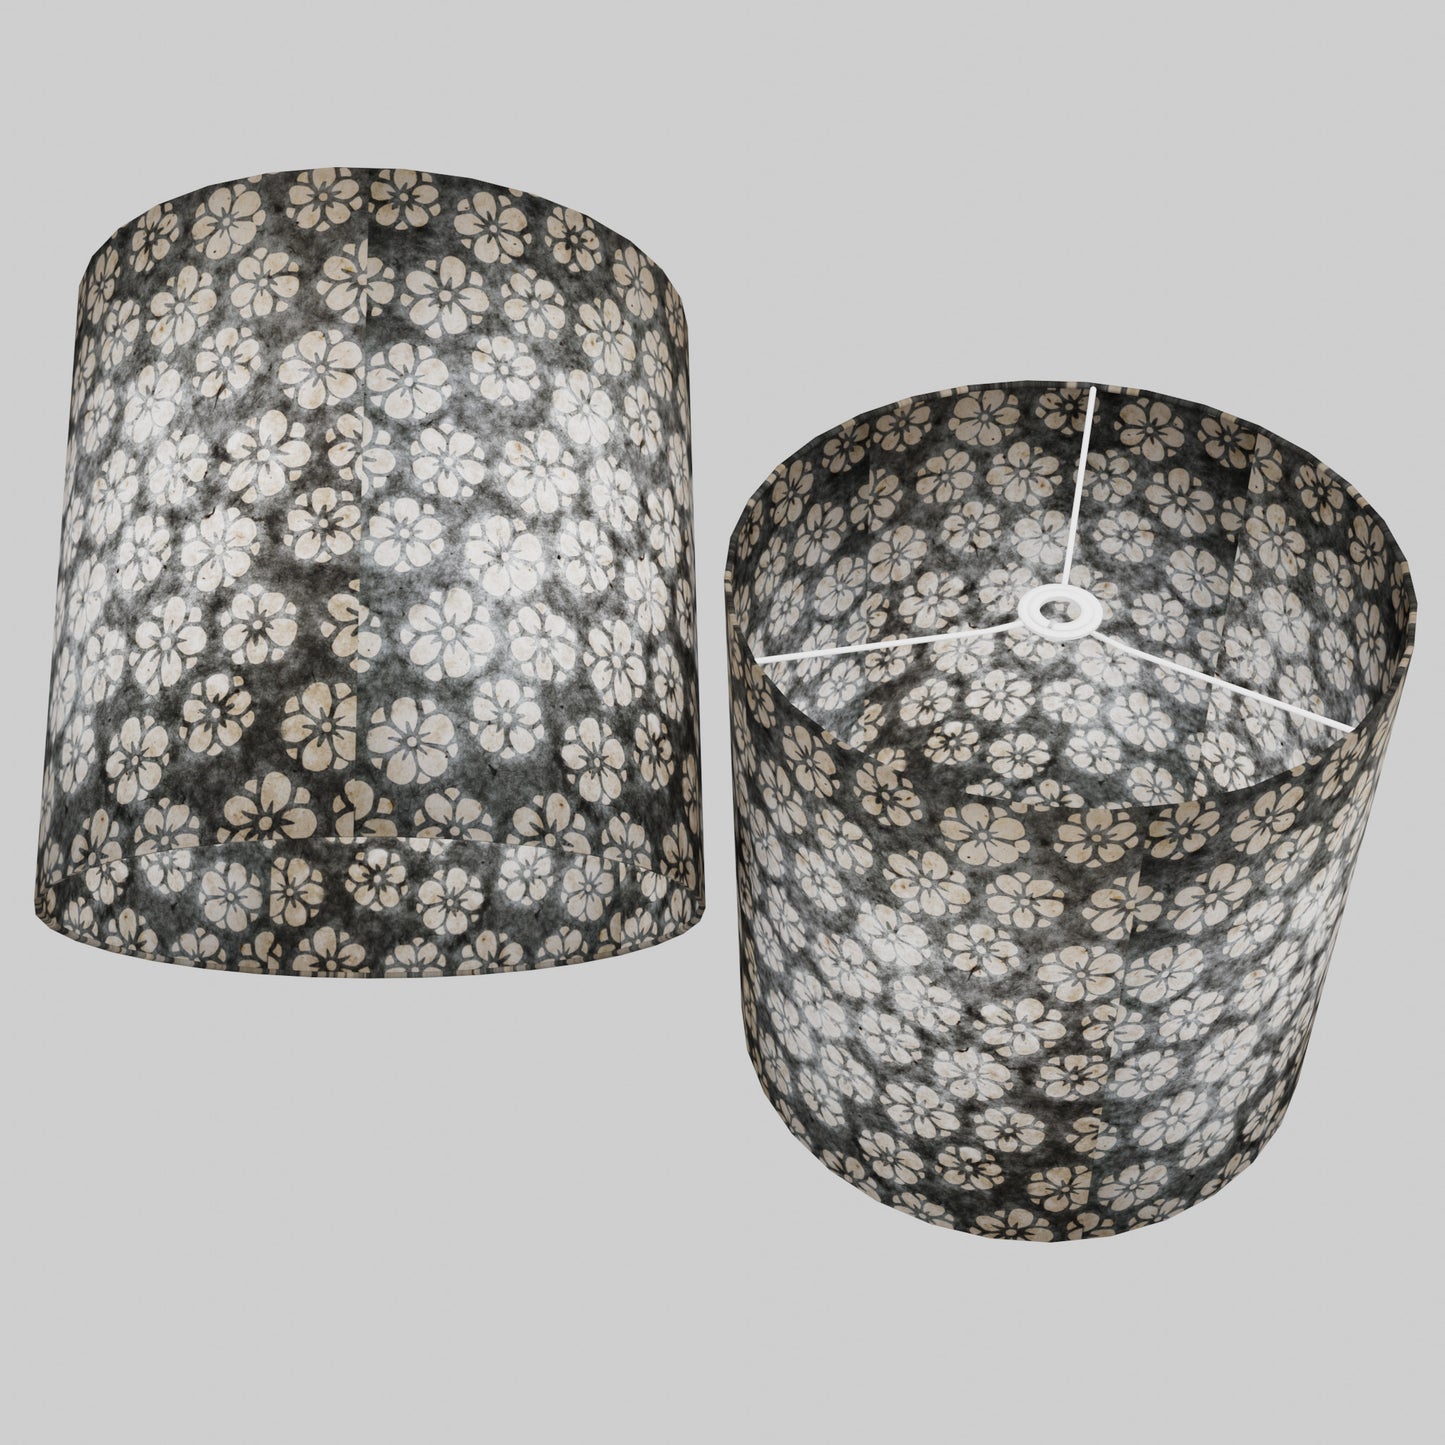 Drum Lamp Shade - P77 - Batik Star Flower Grey, 40cm(d) x 40cm(h)